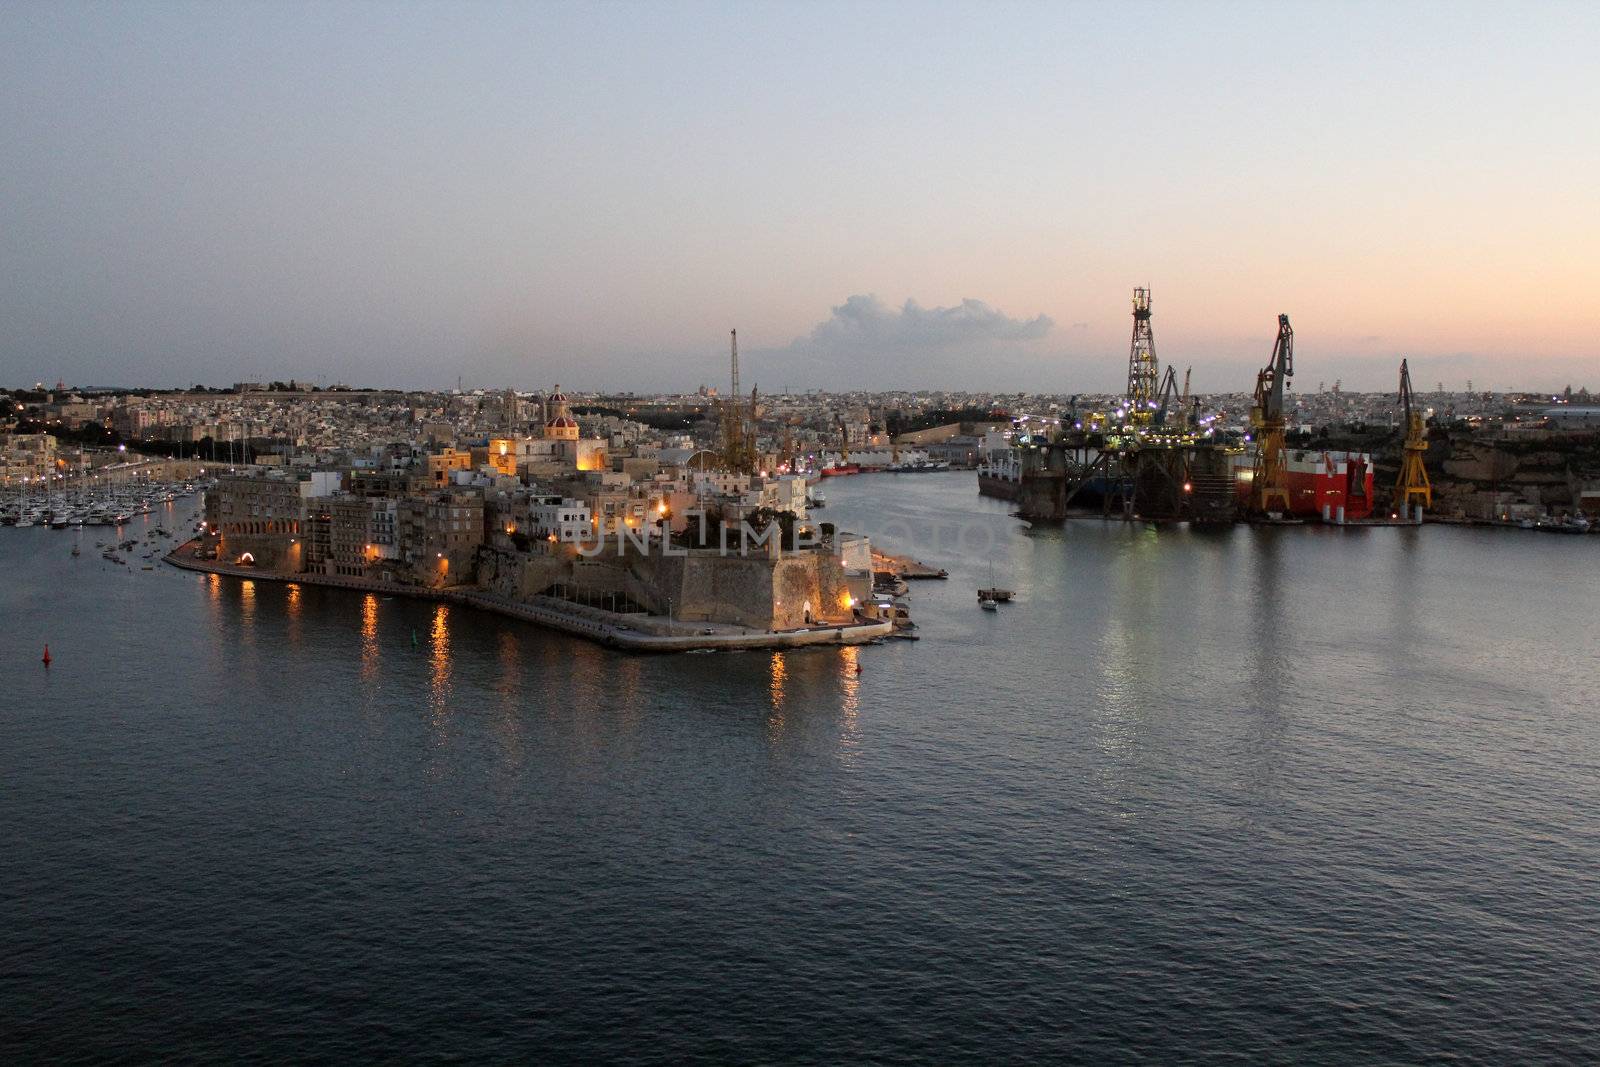 The Malta Grand Harbour at twilight